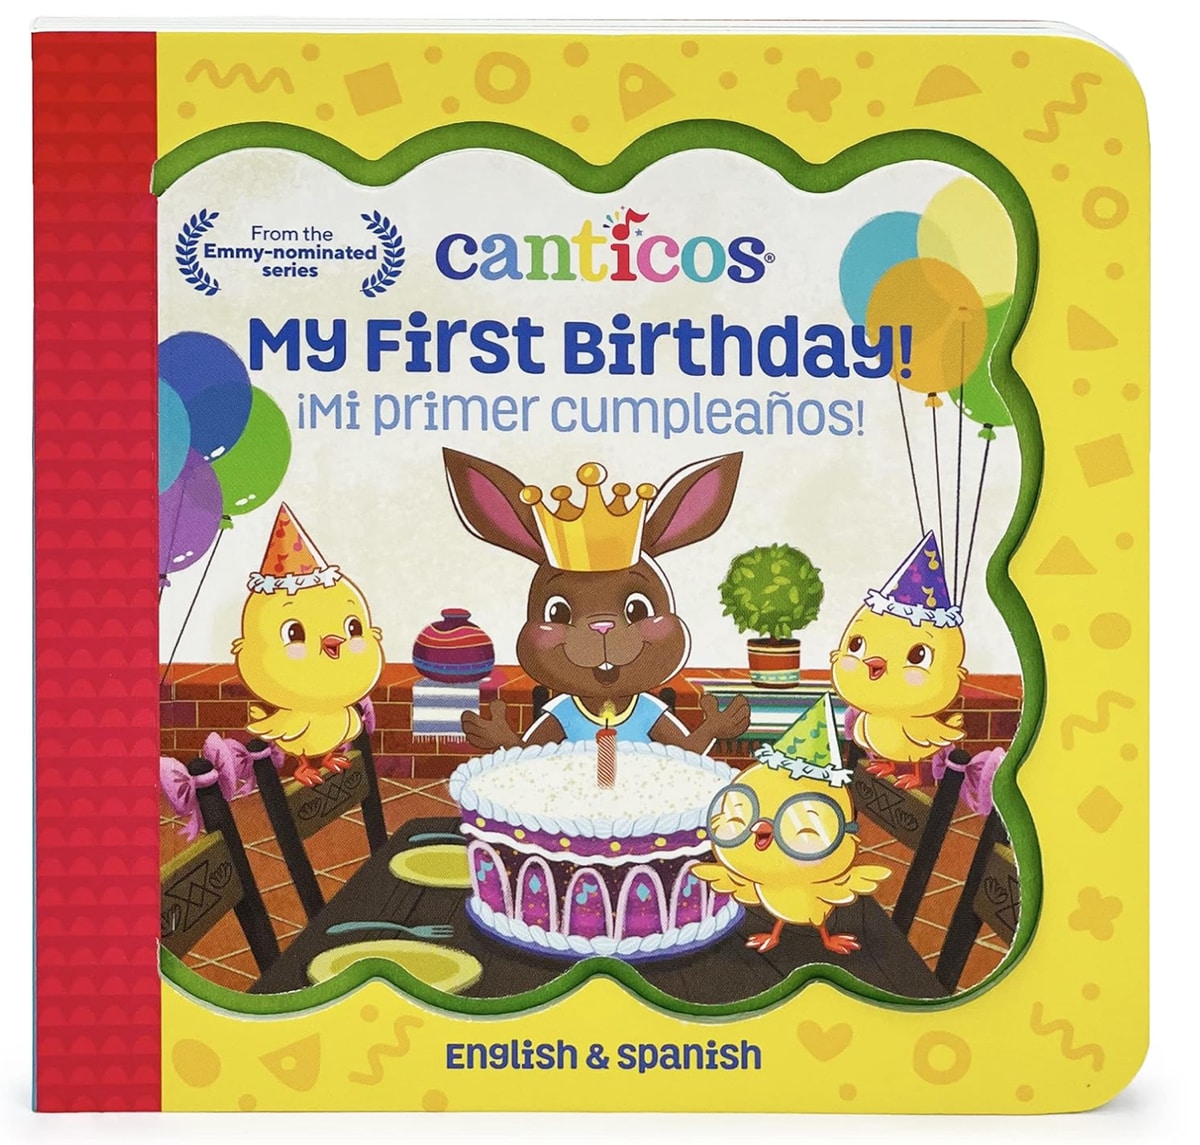 
 "Canticos My First Birthday!" by Susie Jaramillo